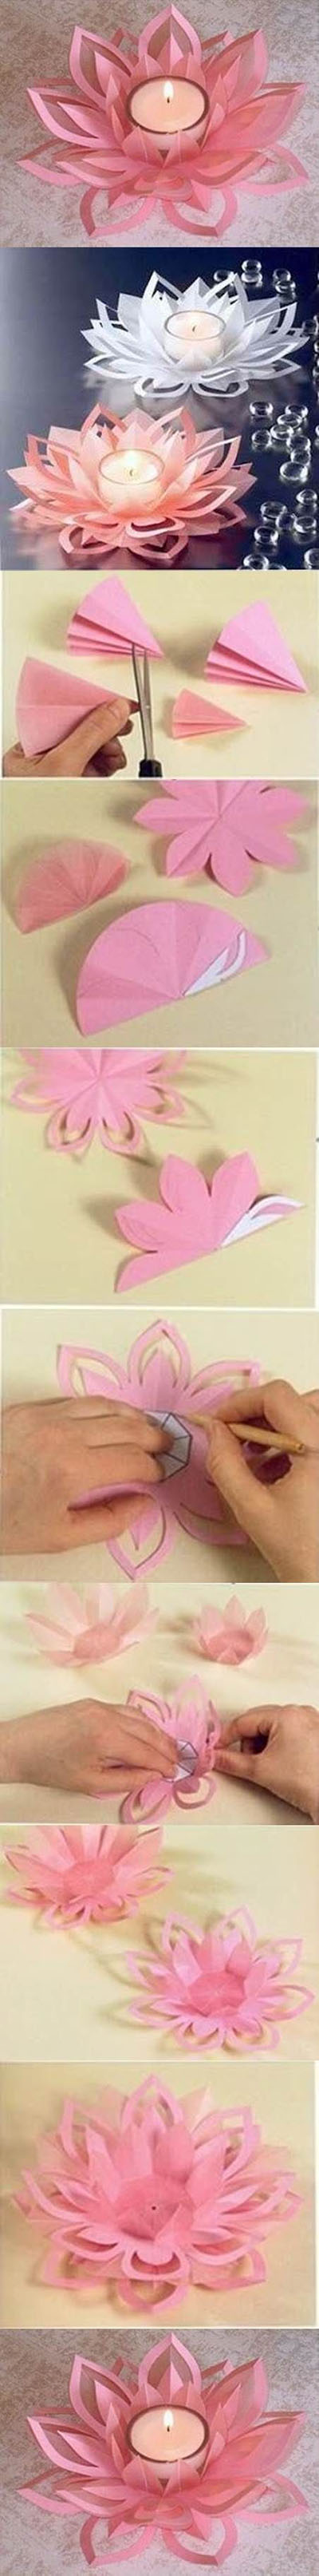 DIY Paper Lotus Candlestick | Useful Tutorials